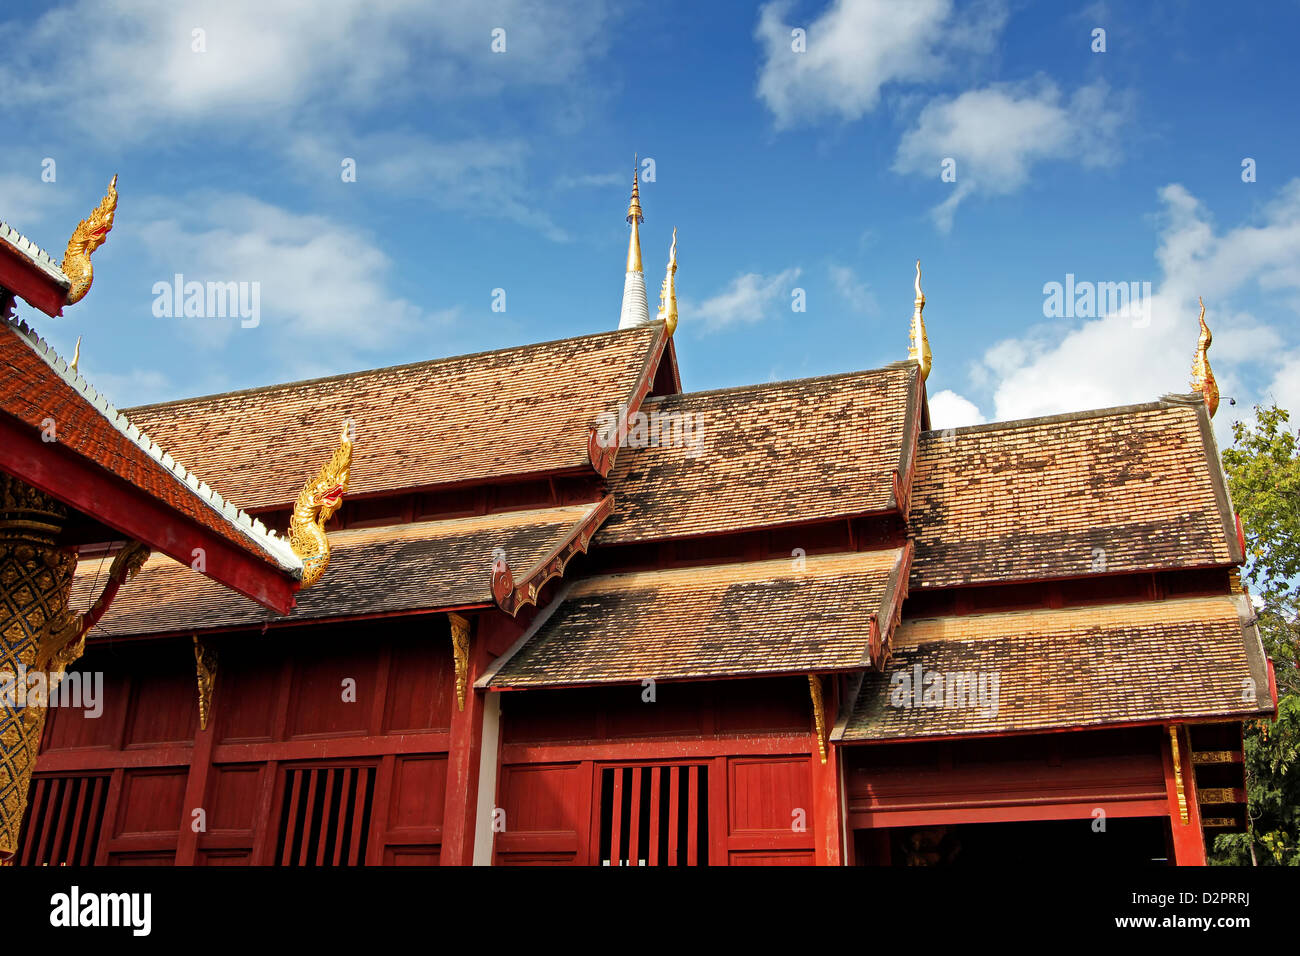 Wat Phra Singh / Chiang Mai / Thailand Stockfoto